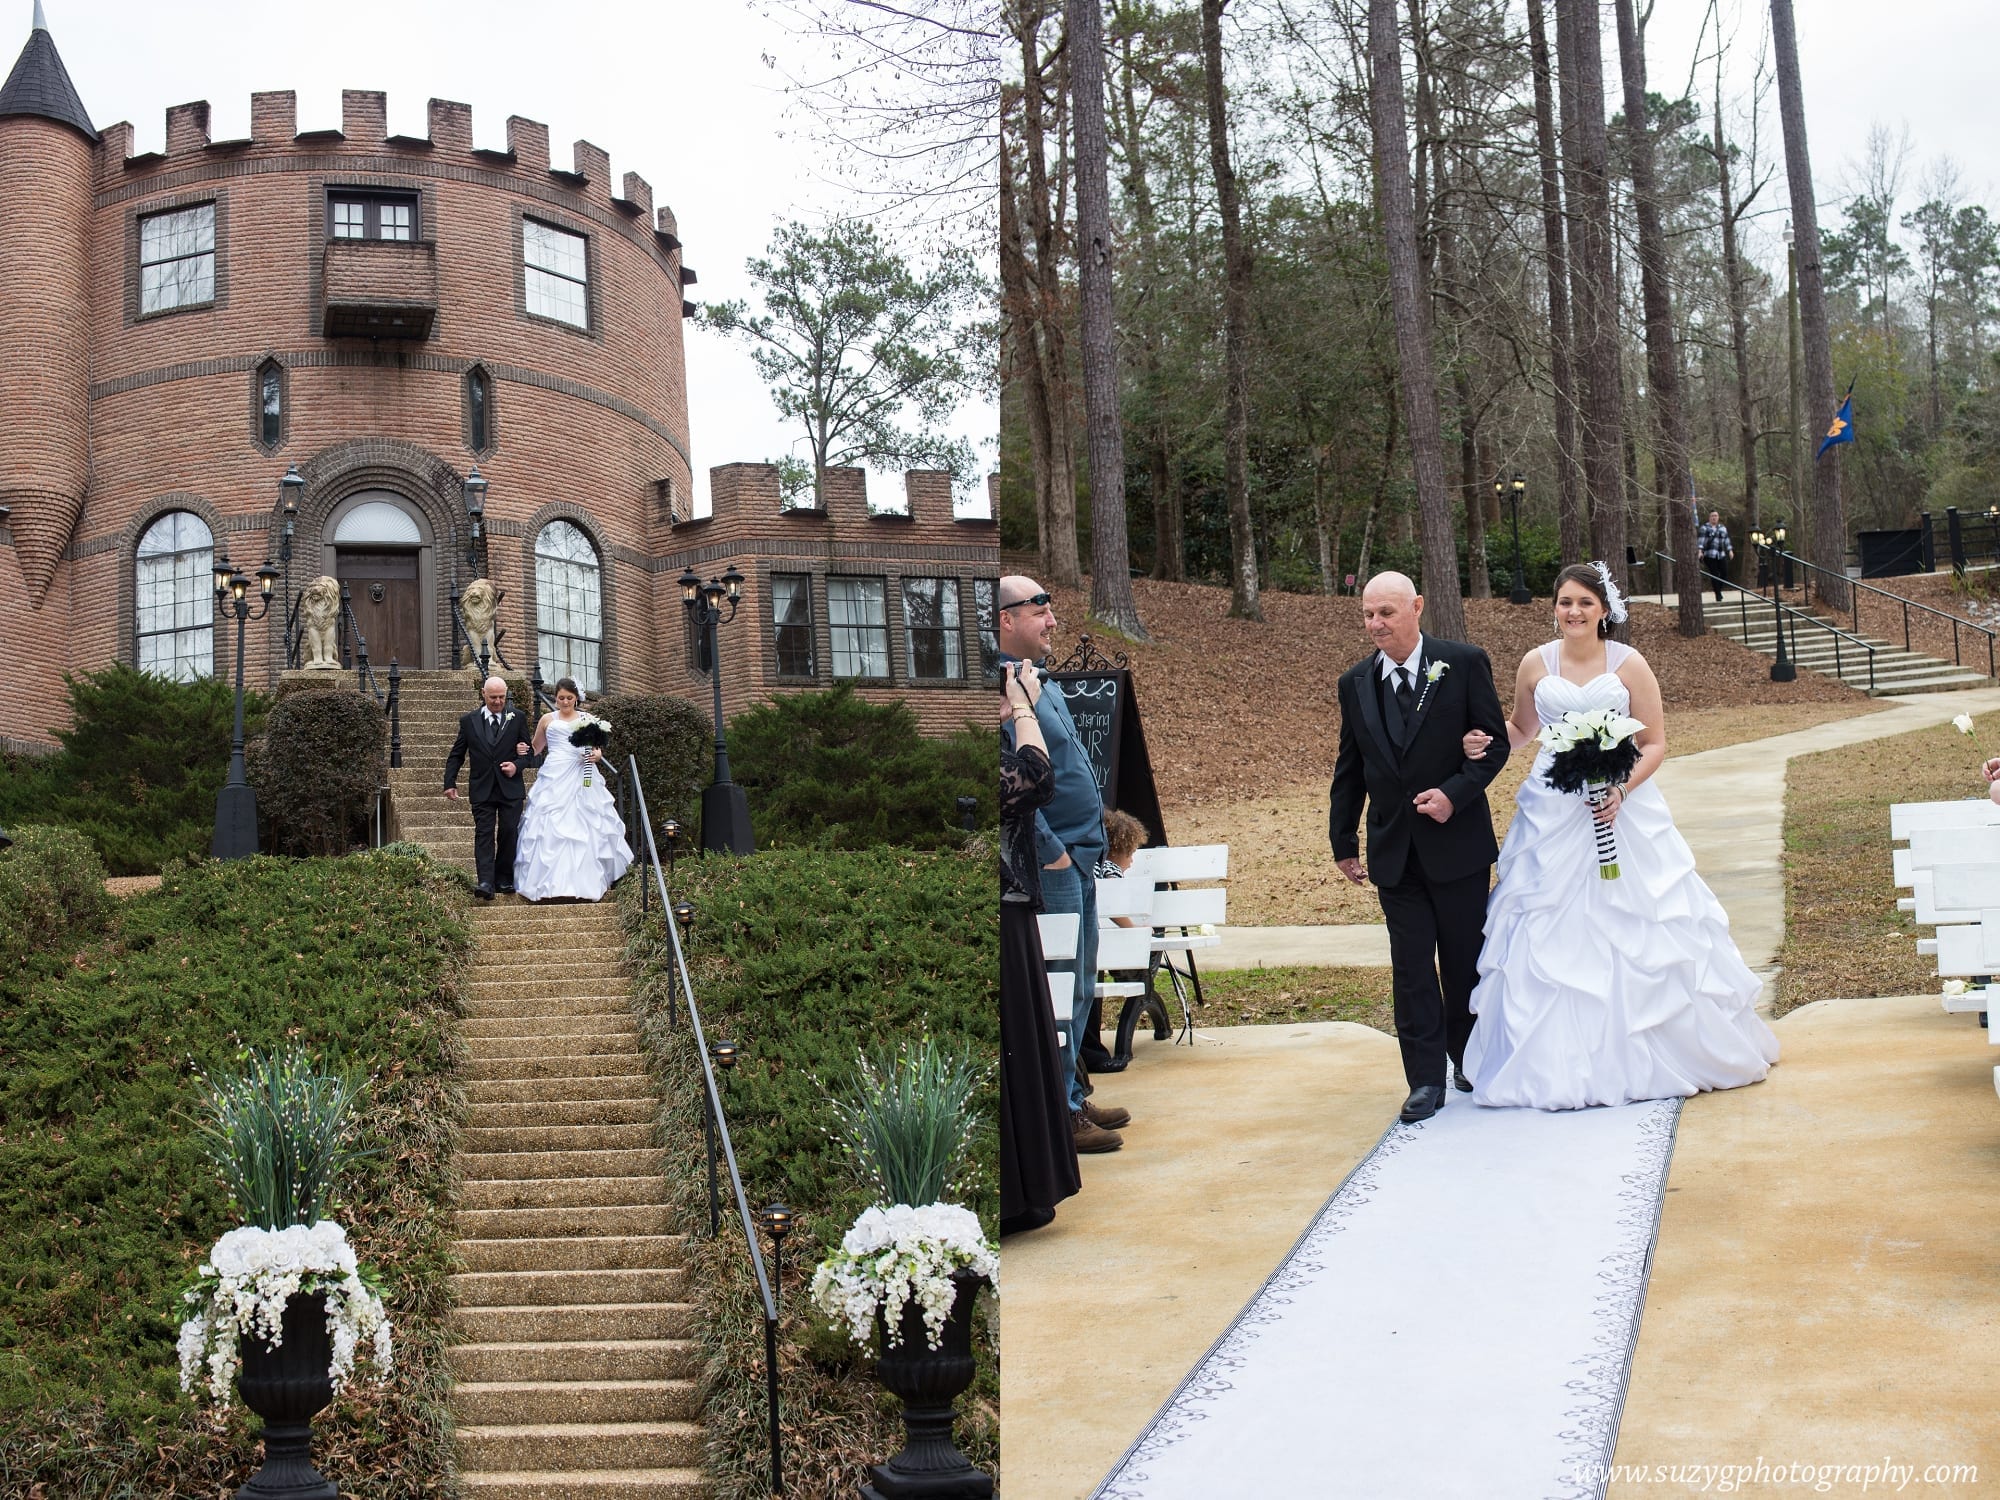 suzy g-louisiana castle-franklington louisiana- texas-mississippi-wedding photography-weddings-suzygphotography_0017